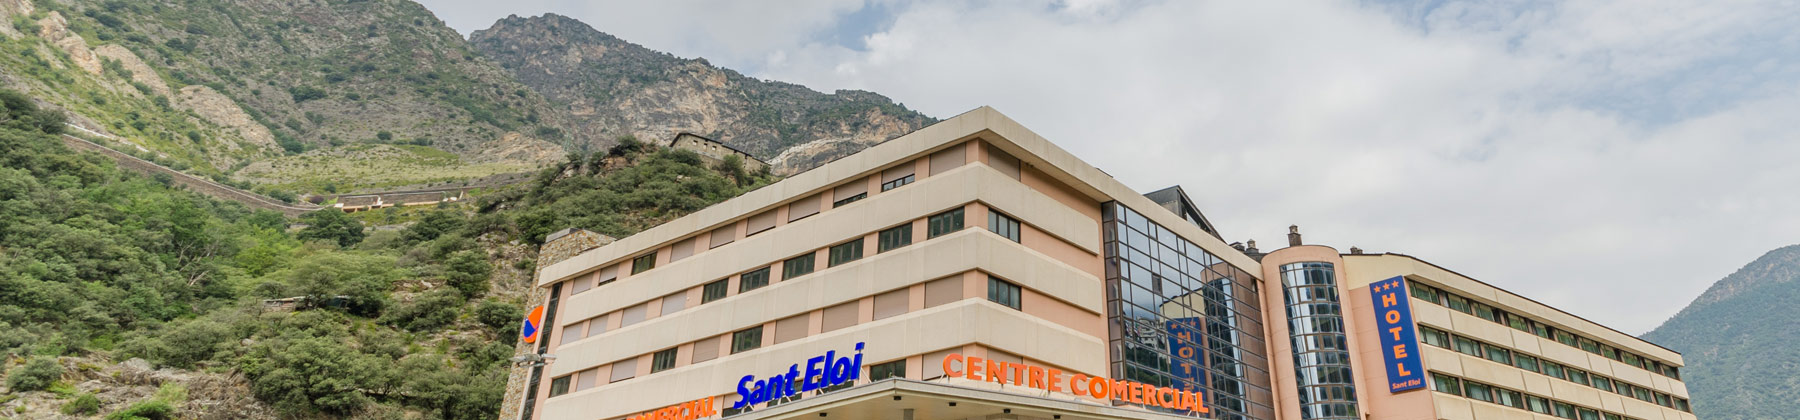 Hotel Sant Eloi  header